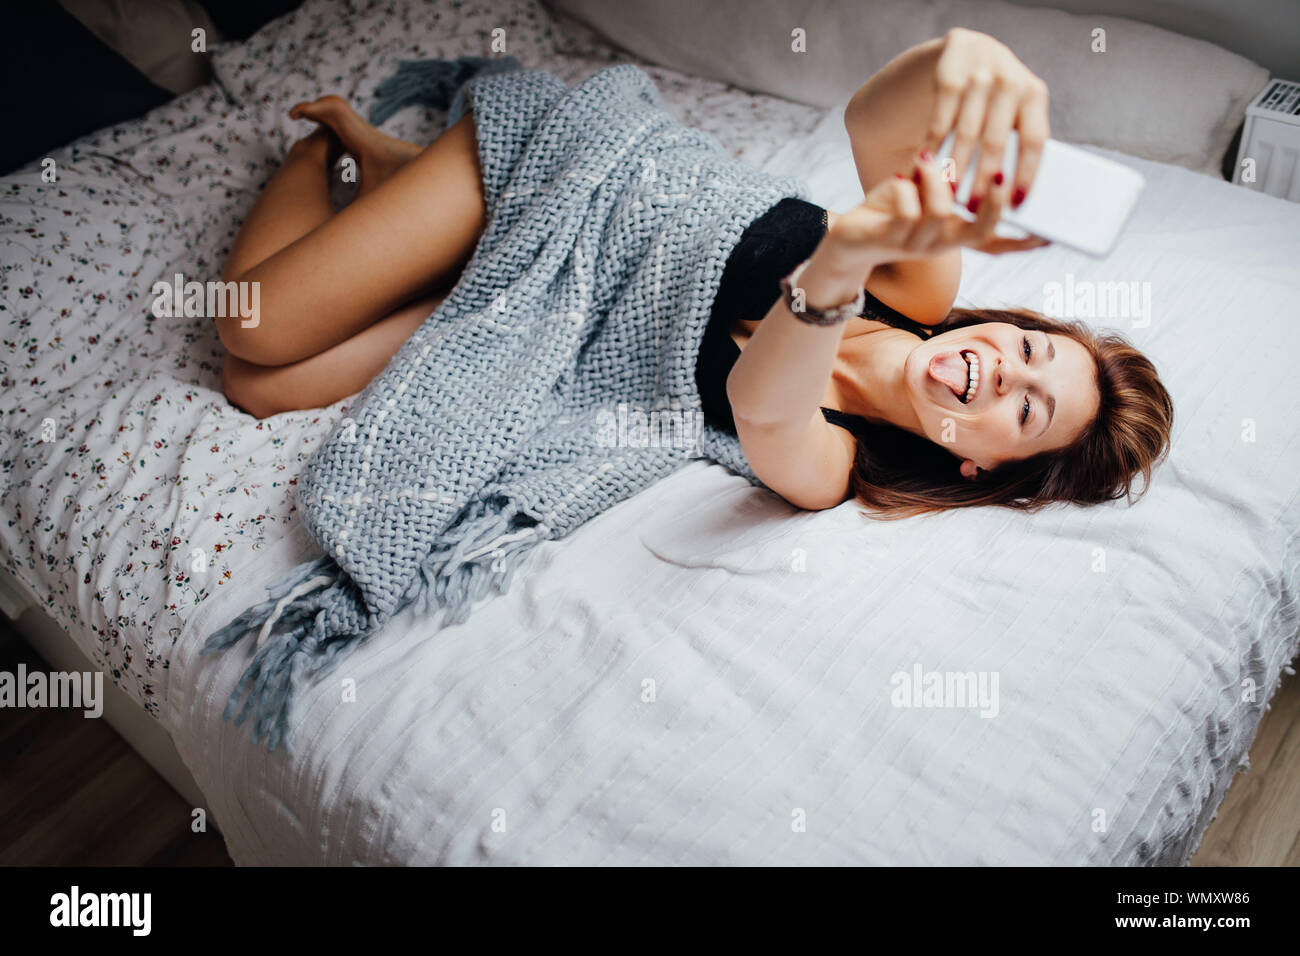 galleries girl laying in bed selfie video gallerie photo